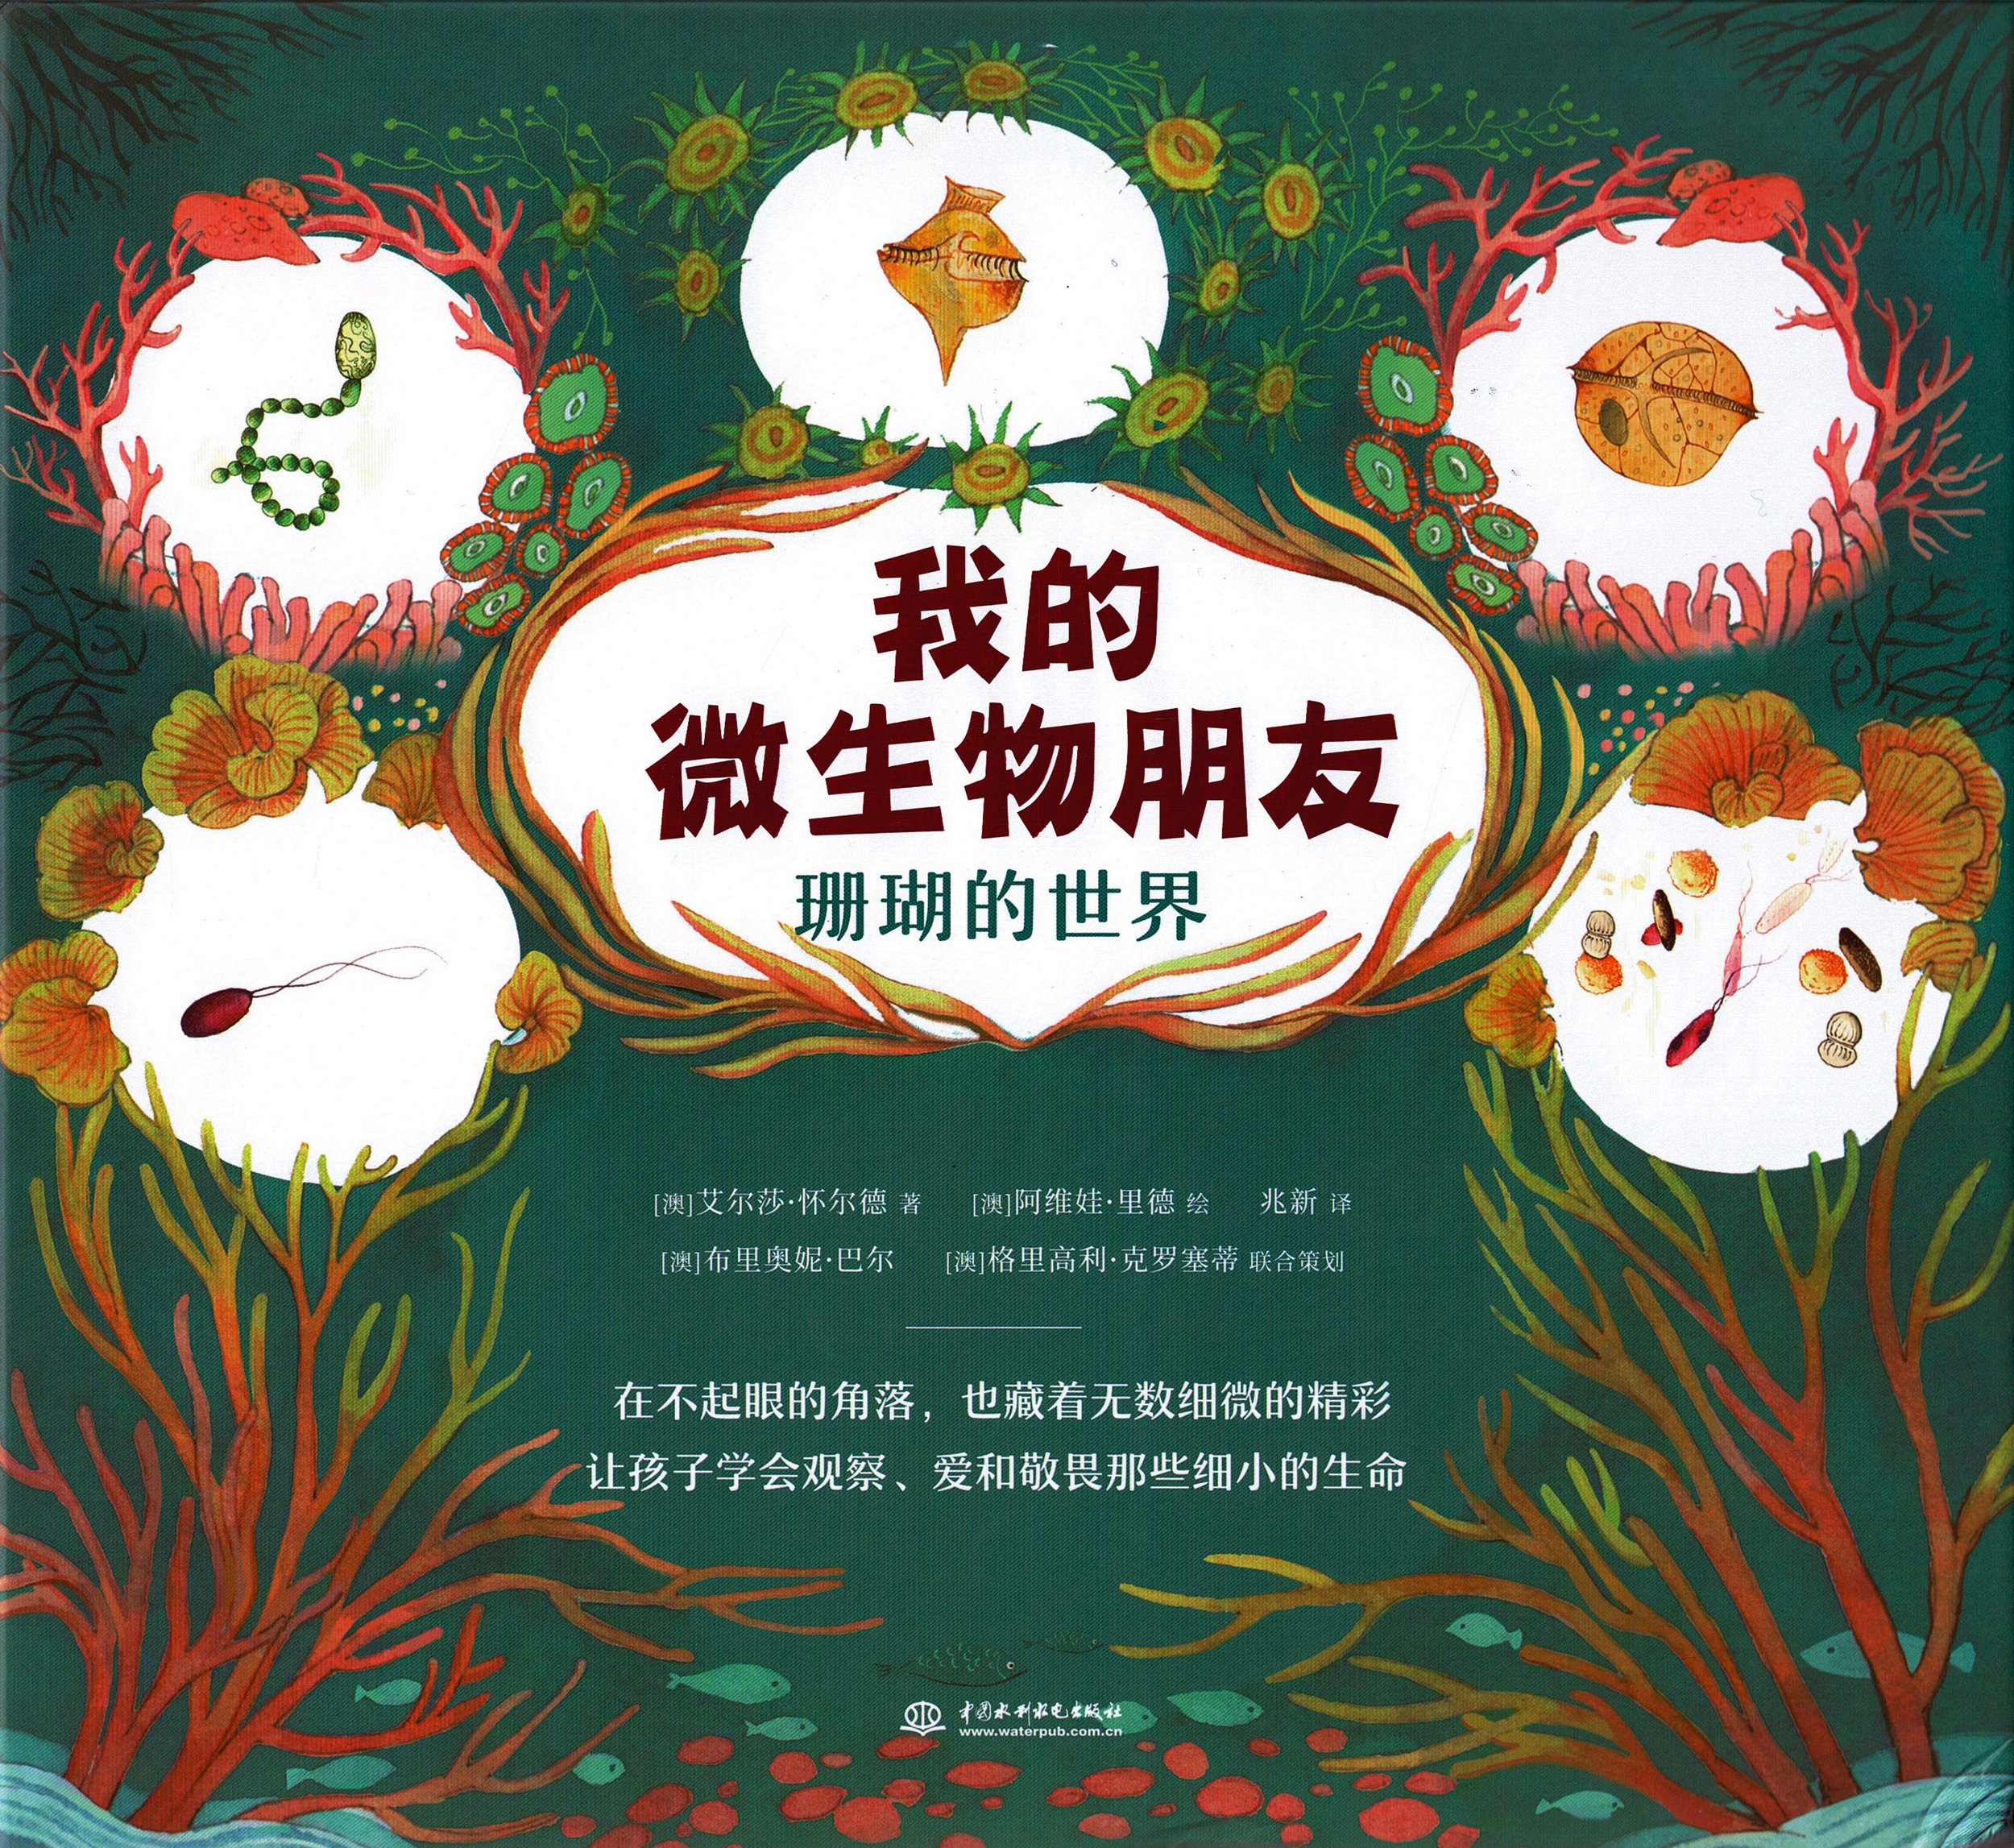 ZZ-chinese-cover.jpg